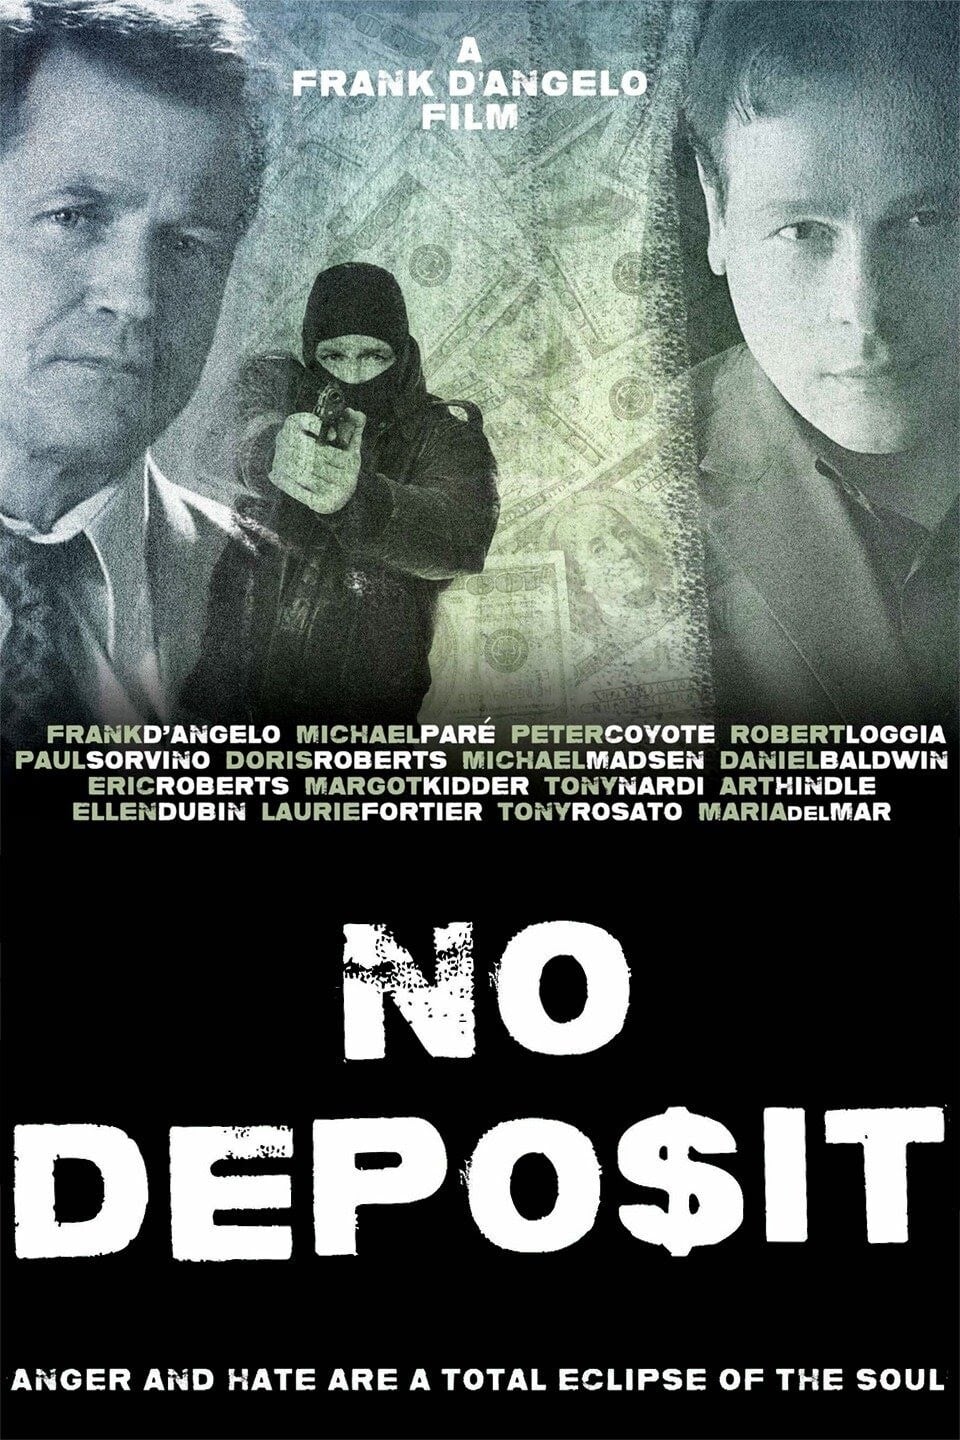 No Deposit (2015)